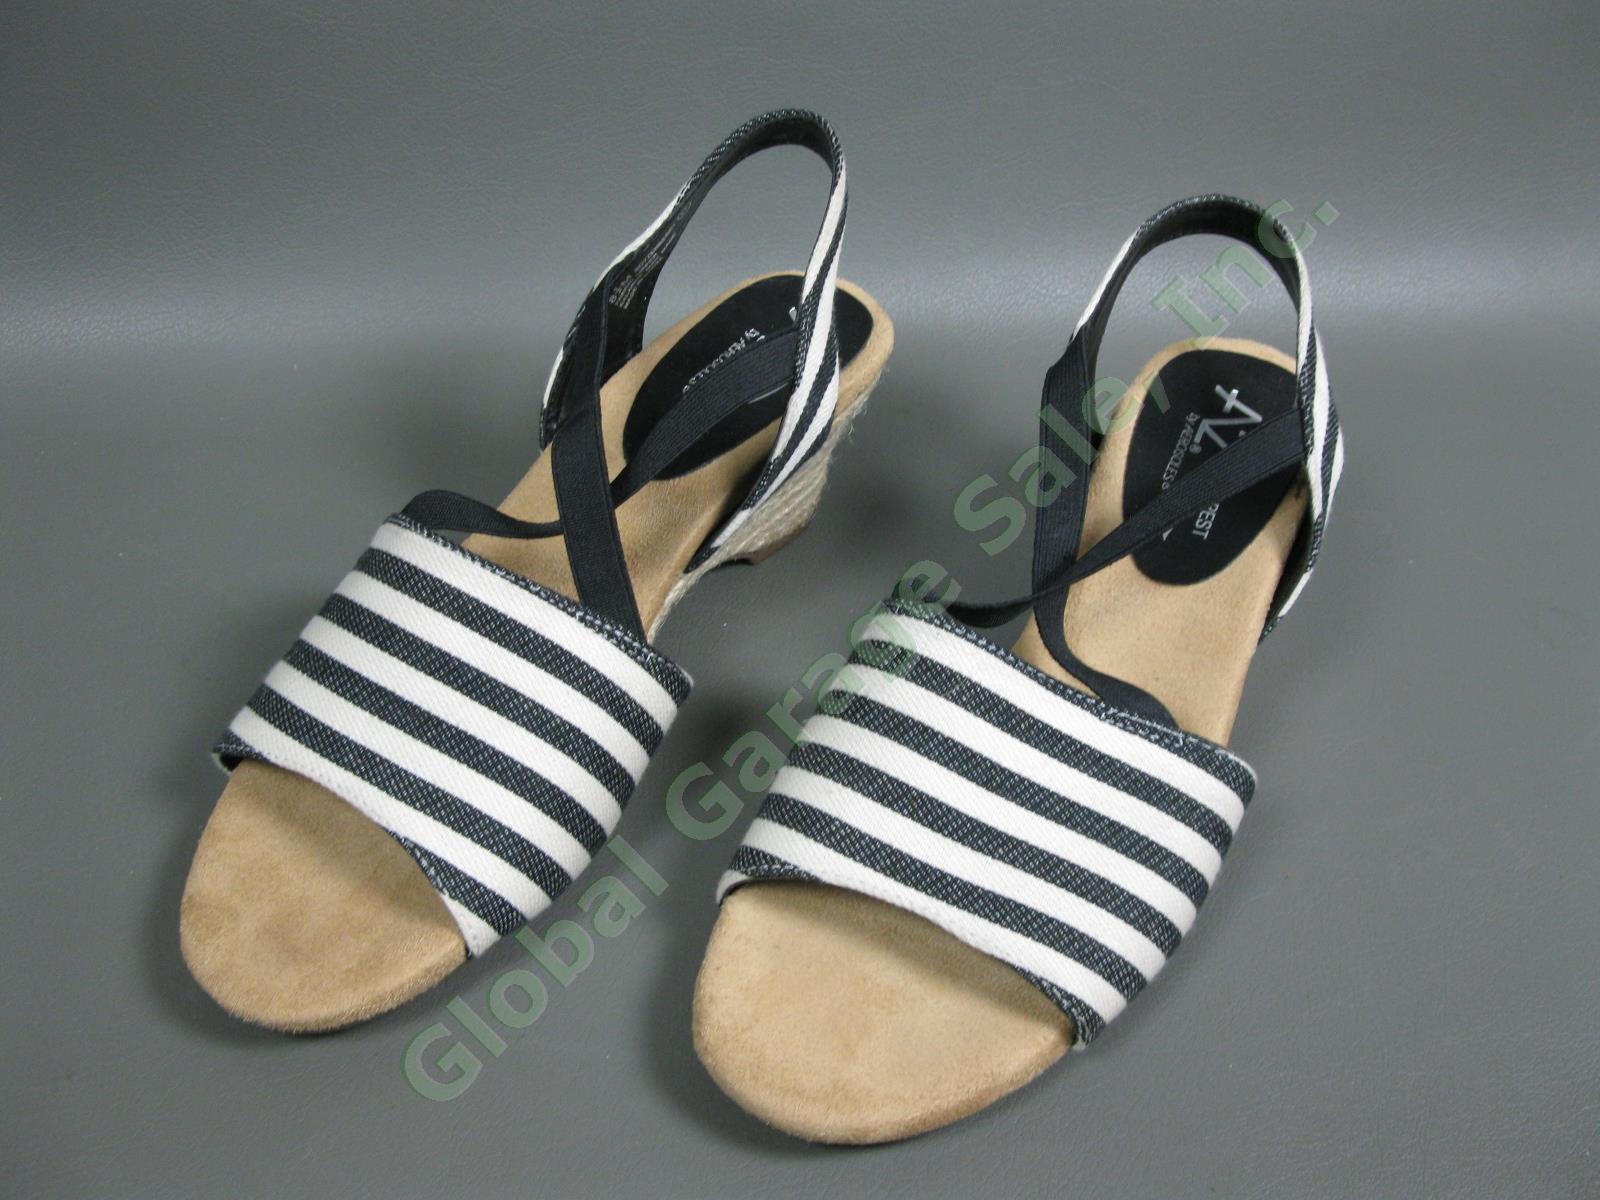 7 Pair Womens Leather Canvas Summer Sandal High Heel Size 6-10 Dress Shoe Lot 5